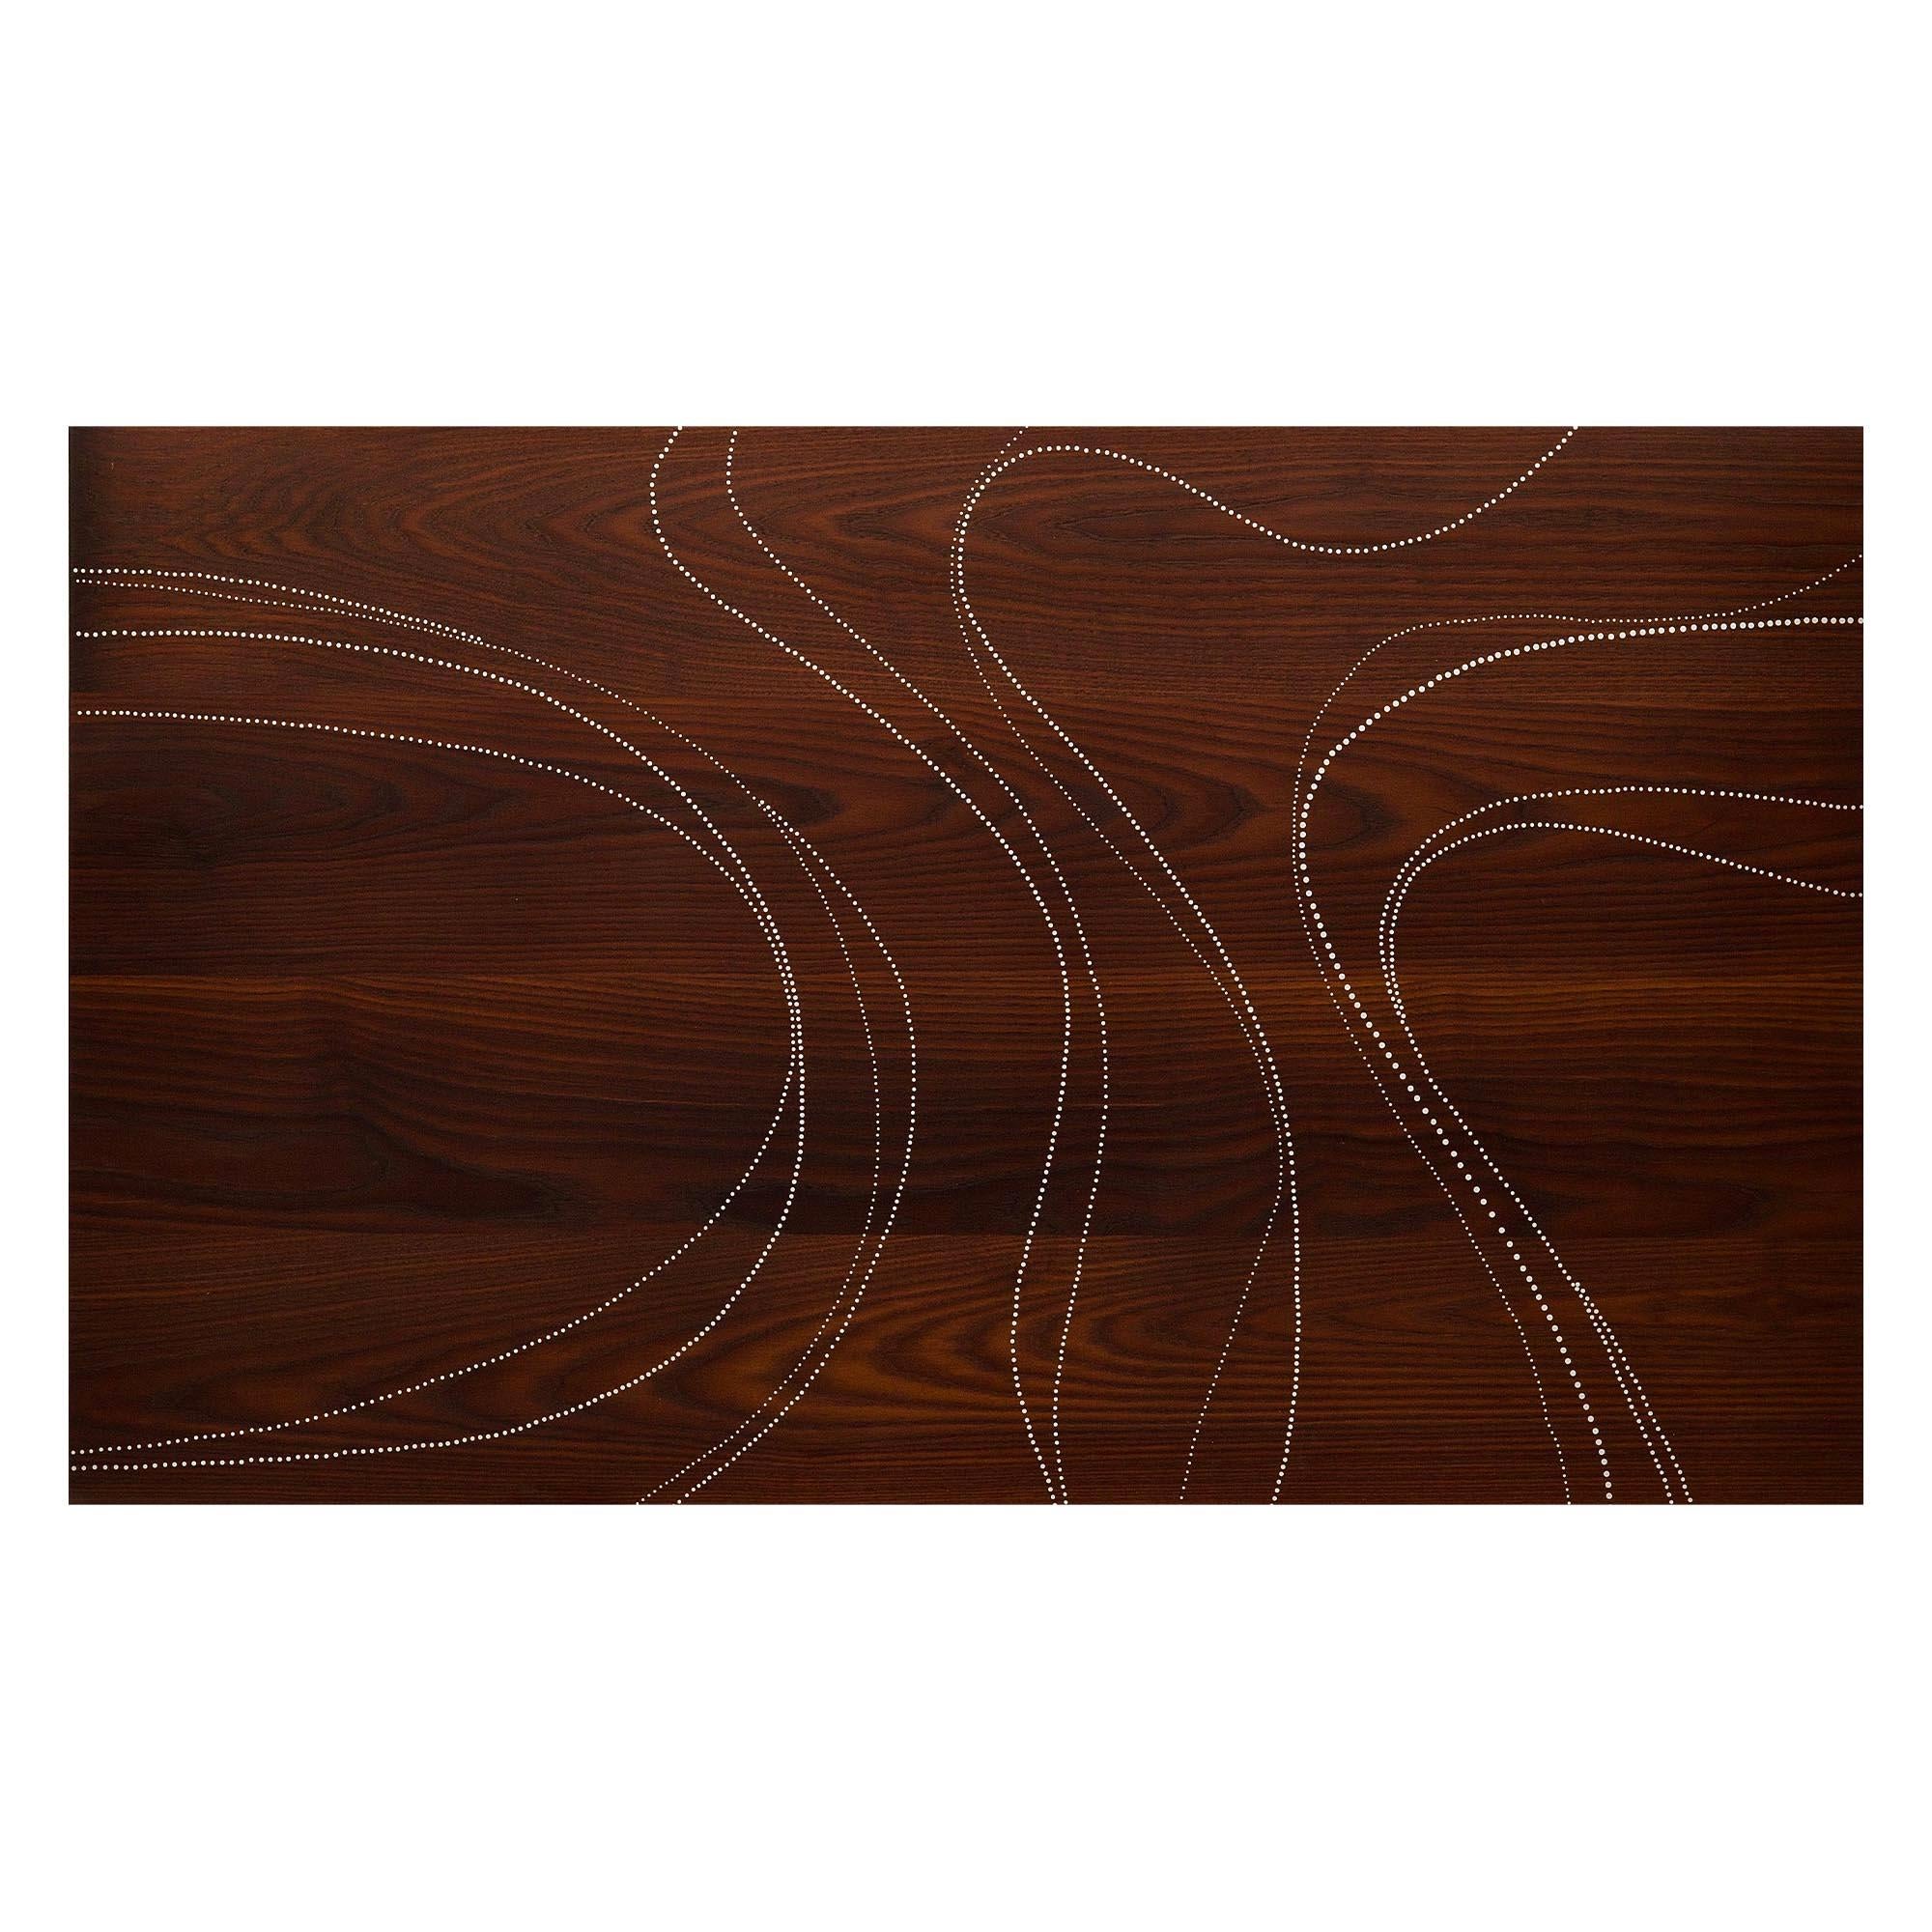 Modern contemporary nail inlay coffee table no. 30 by Peter Sandback.
brown ash, nails
Measures: 32